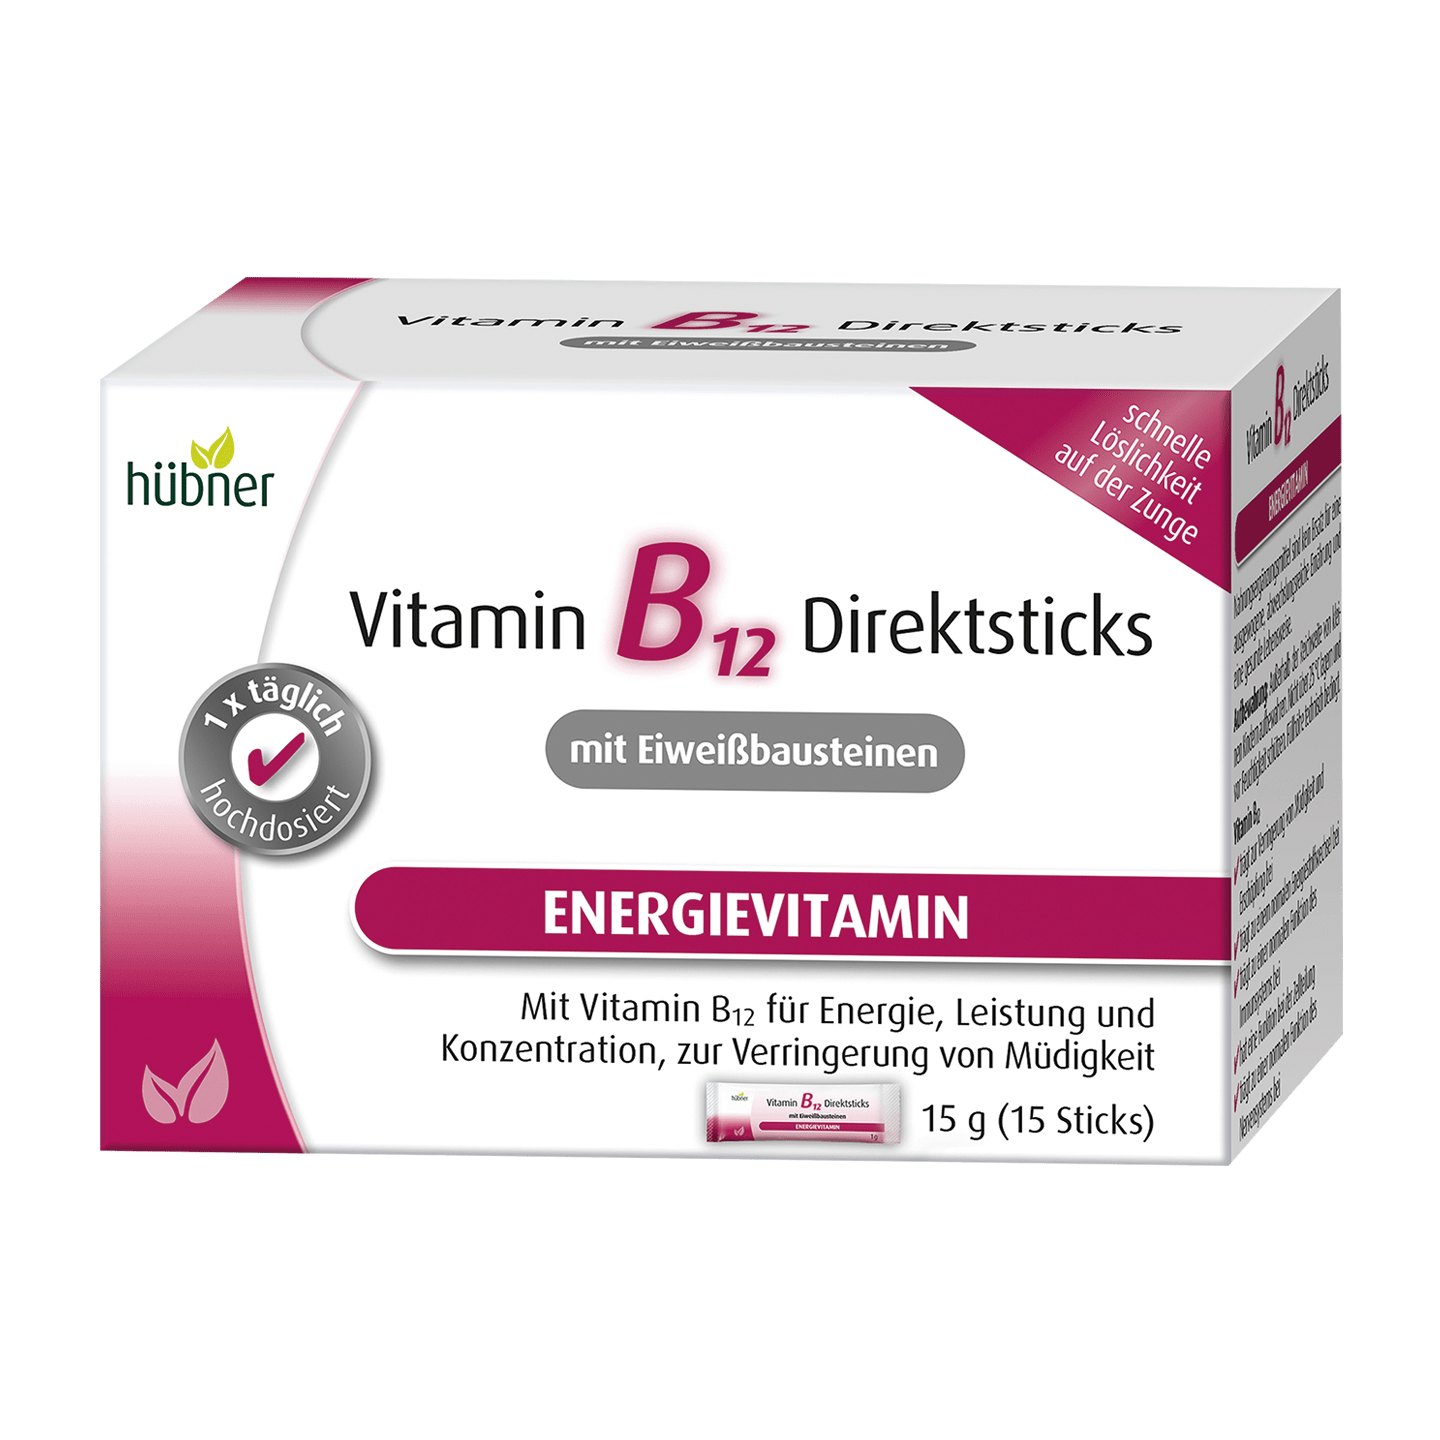 Vitamin B12 Direktsticks vorne